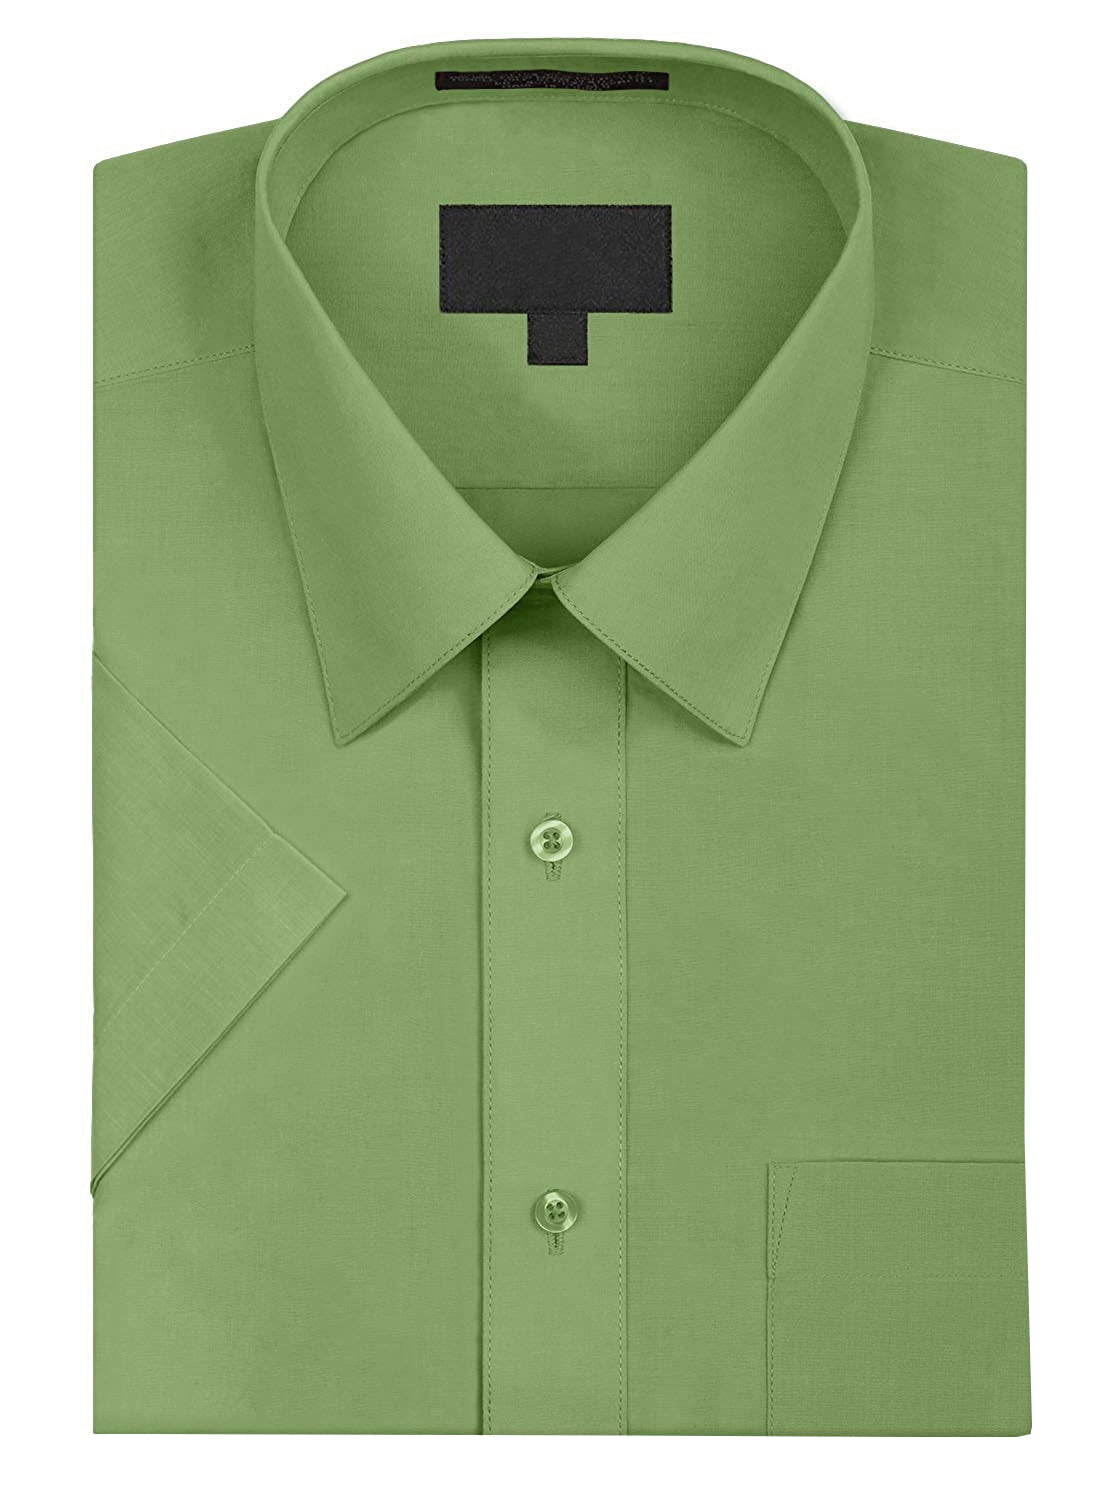 ALL Sizes MENS Classic Green Short Sleeve Dress Shirt 